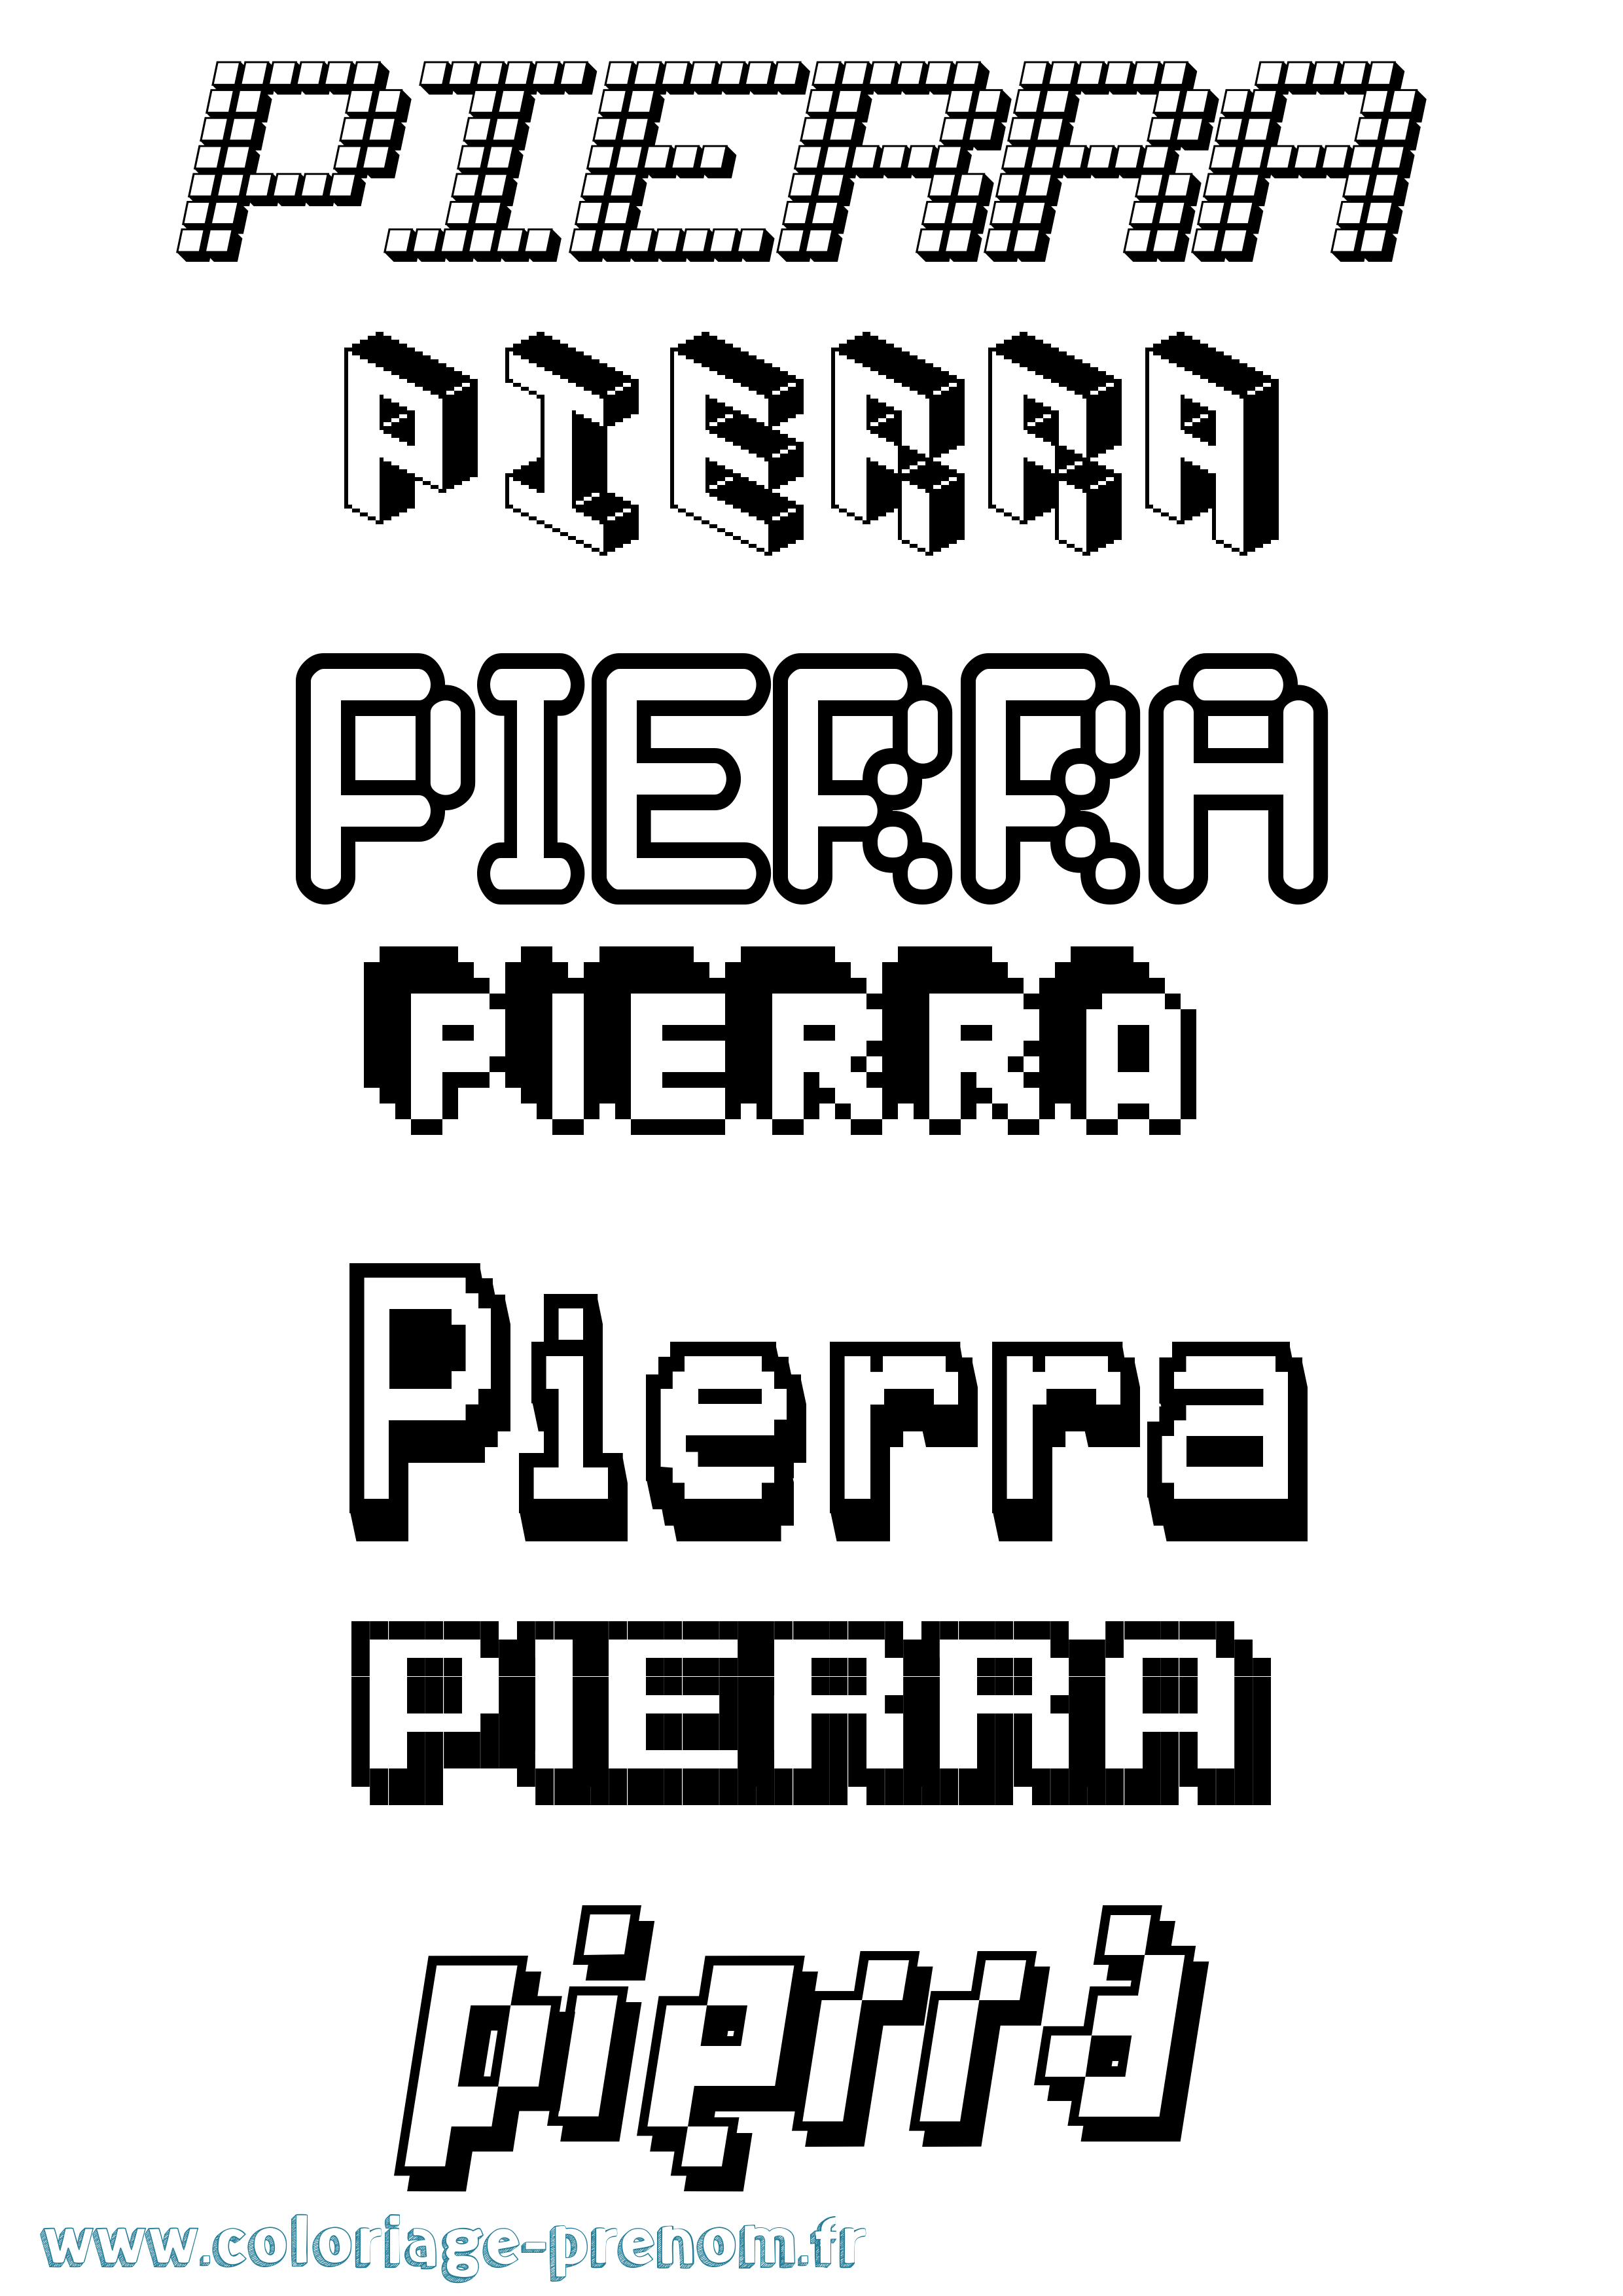 Coloriage prénom Pierra Pixel